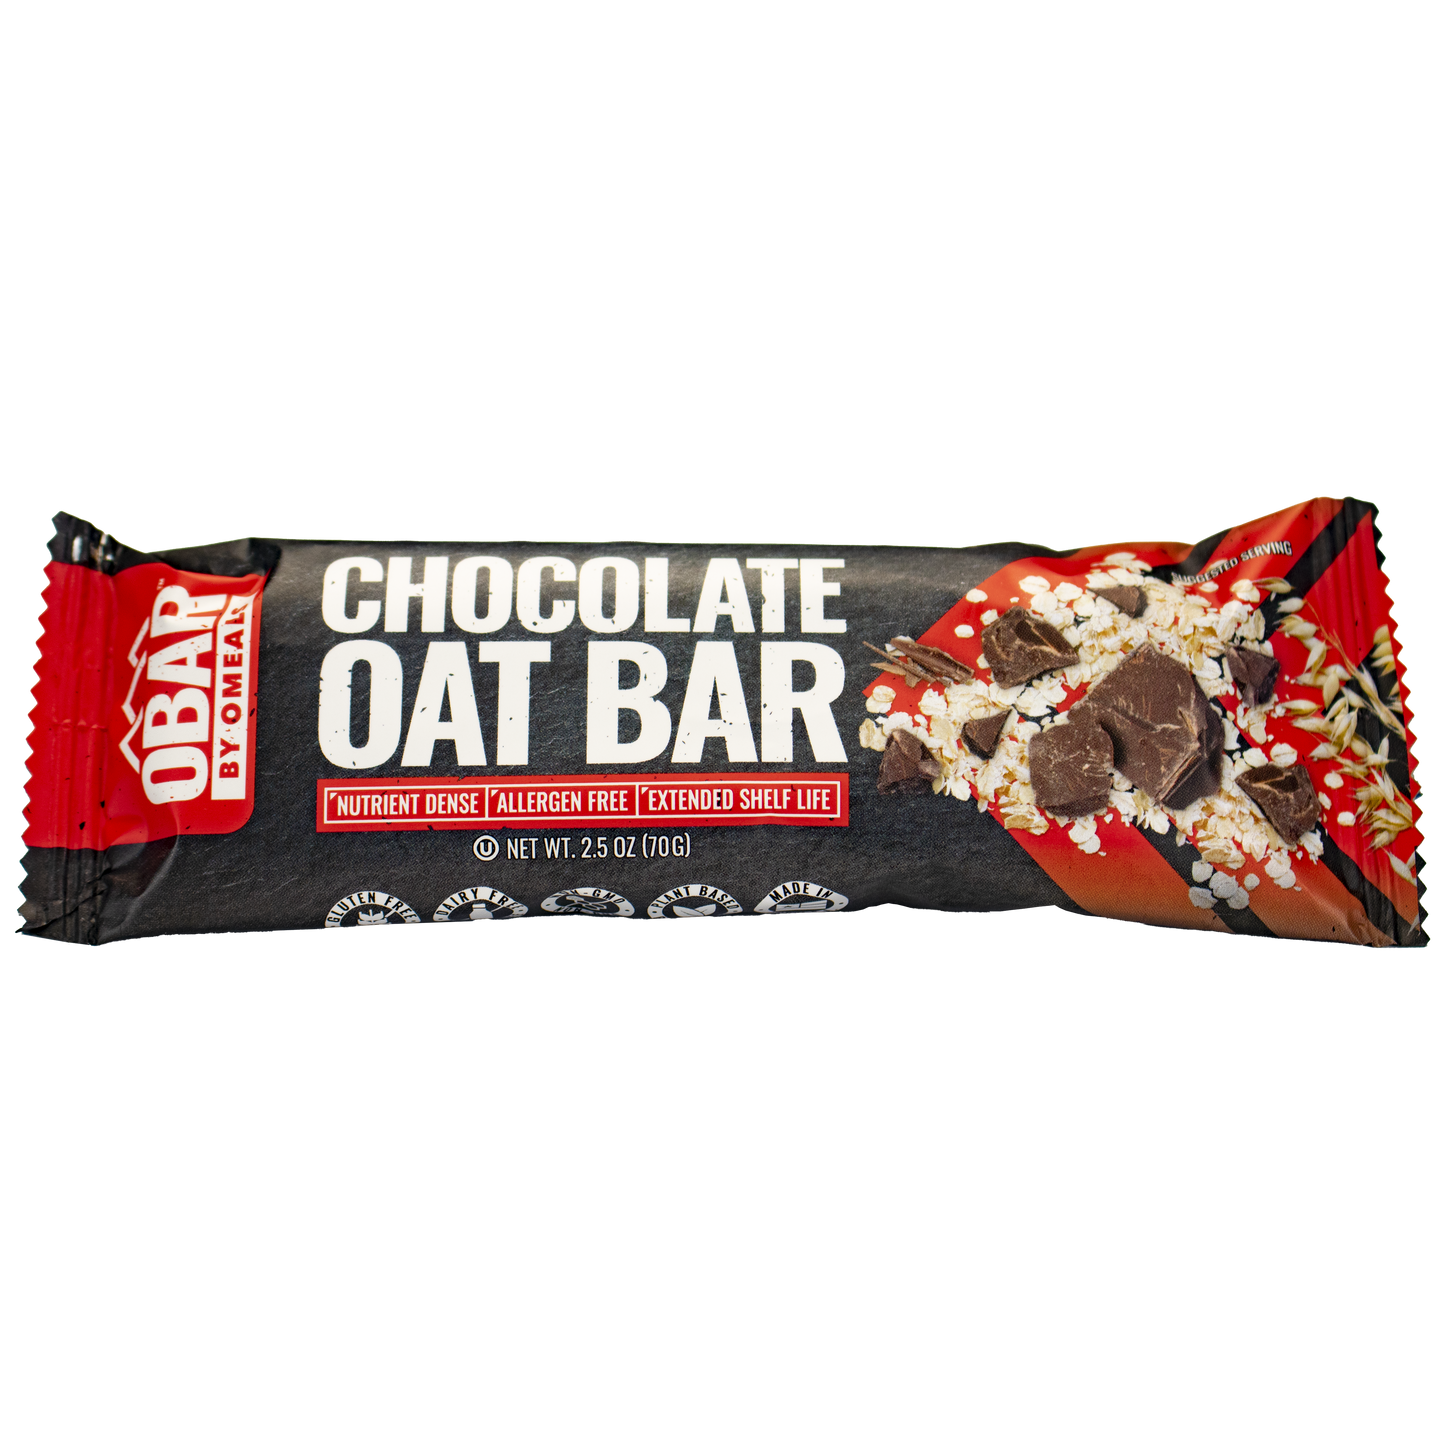 Delicious Chocolate Oat bar, allergen-free, nutrient-dense